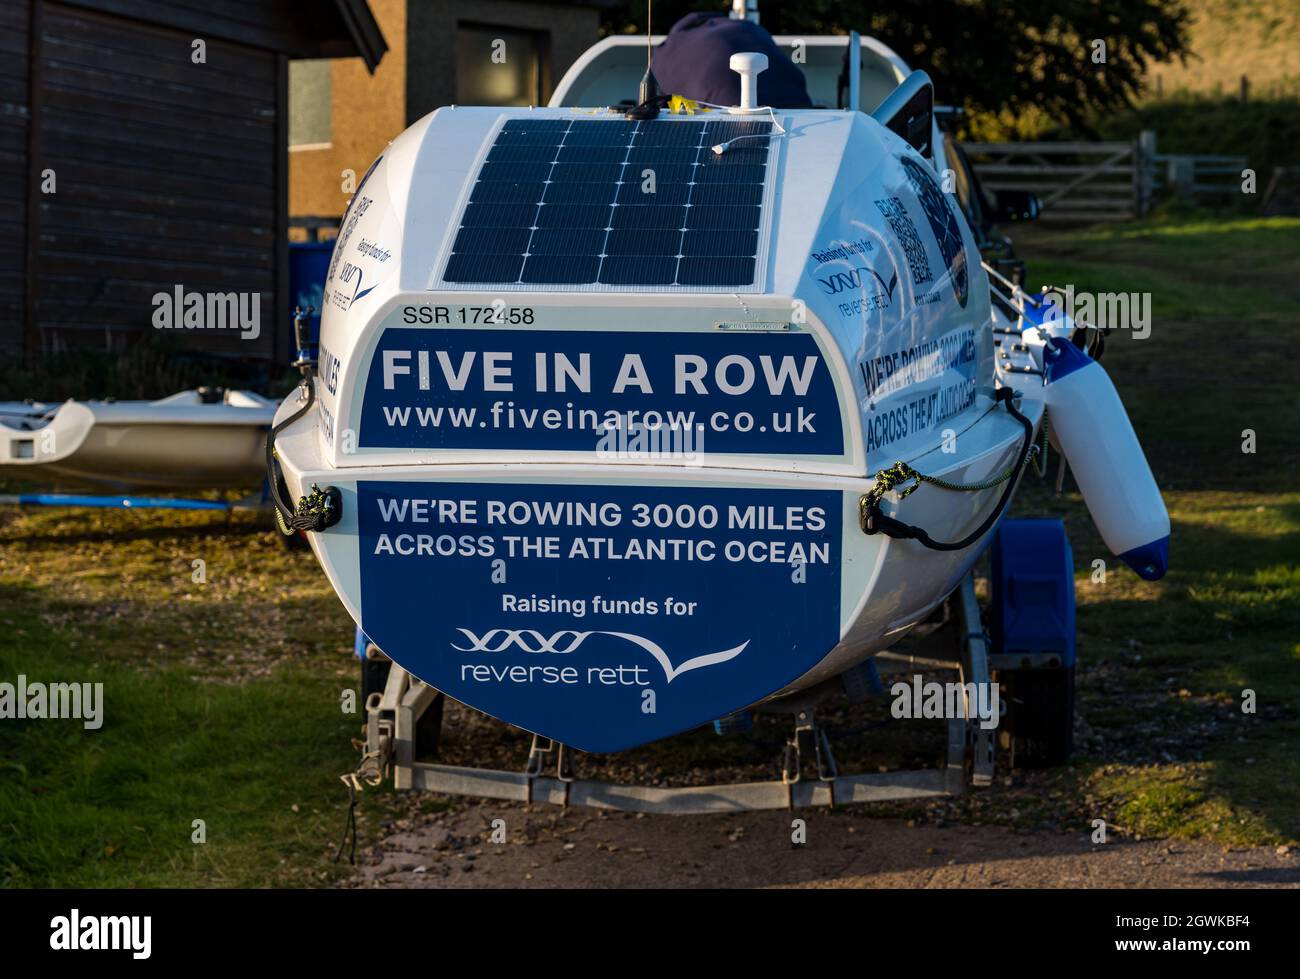 Ocean rowing boat on boat trailer raising funds for Reverse Rett Syndrome in Atlantic challenge, East Lothian, Scotland, UK Stock Photo